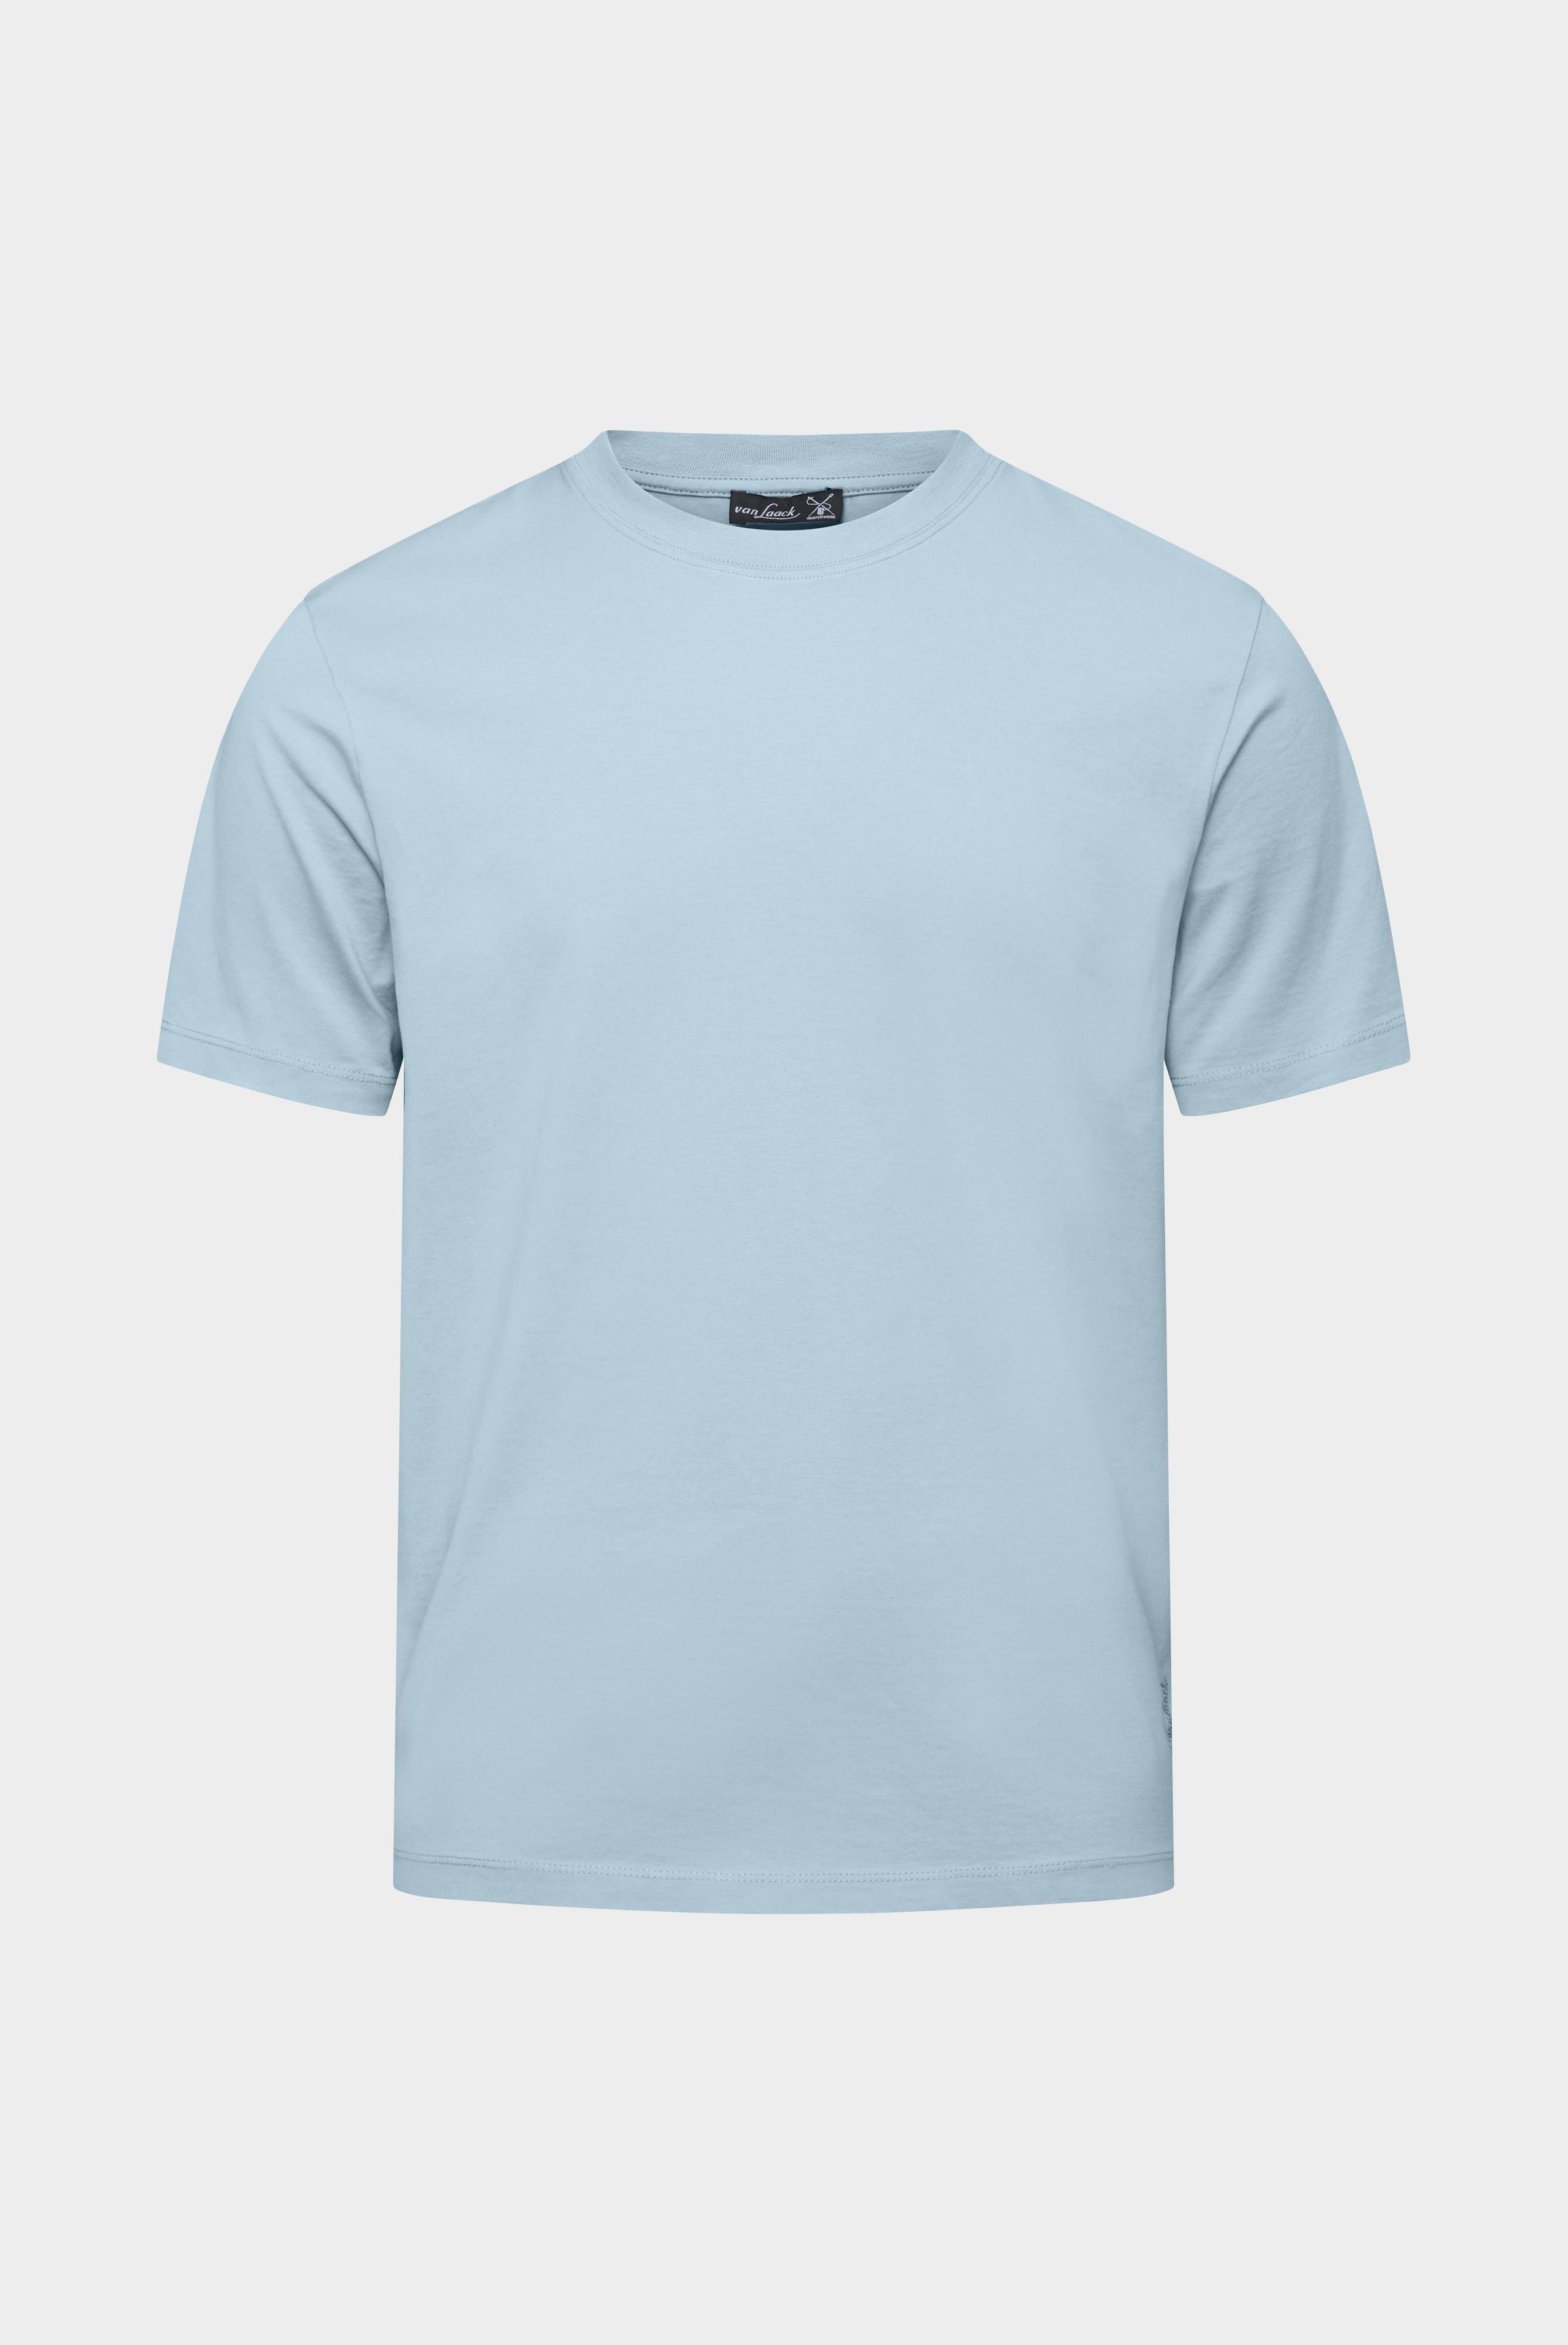 T-Shirts+T-Shirt in Long Staple Cotton+20.1660..Z20044.720.M